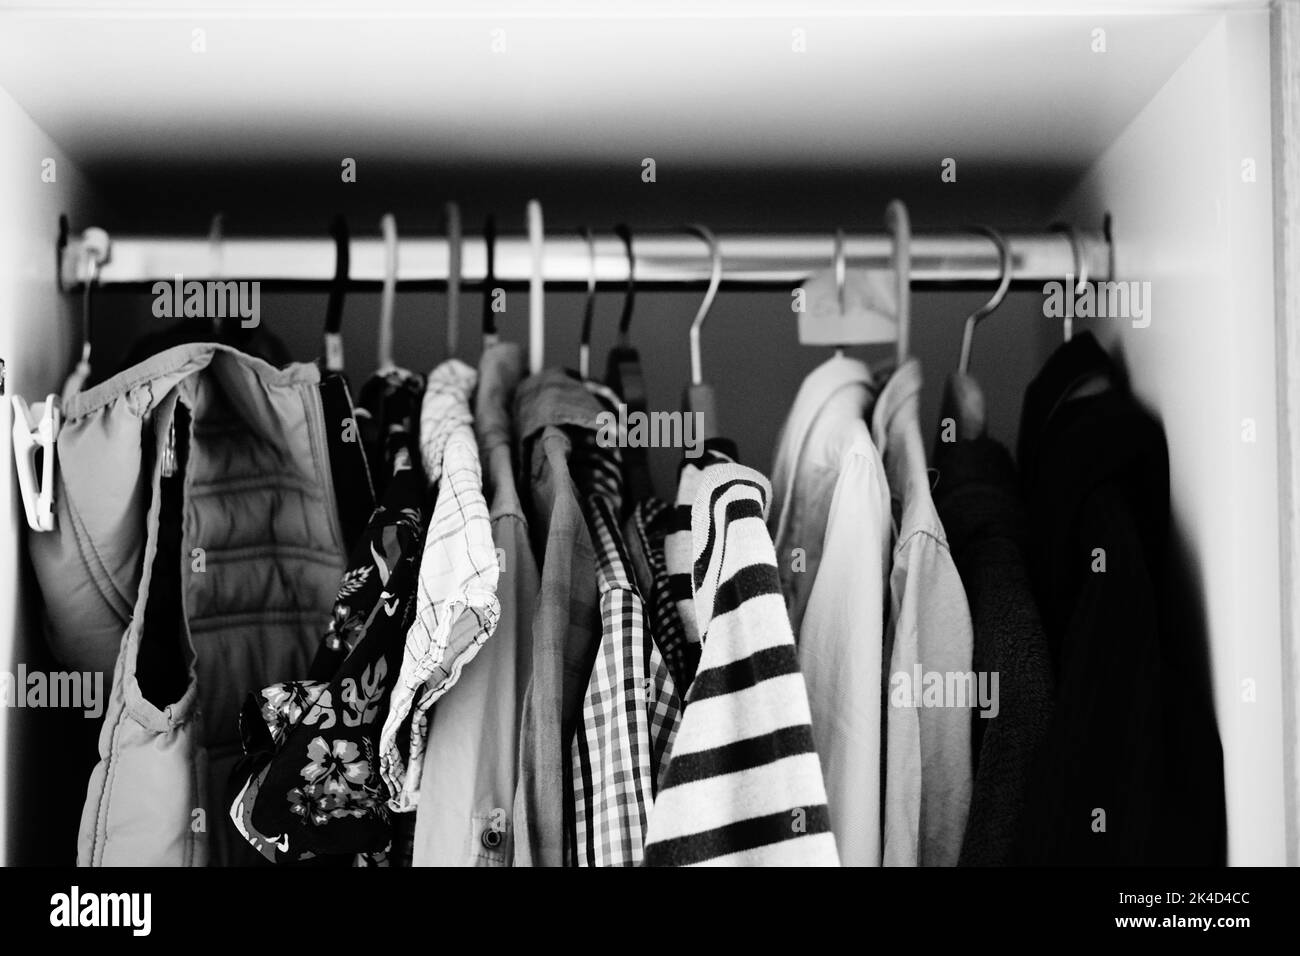 Clothes wardrobe man Black and White Stock Photos & Images - Alamy